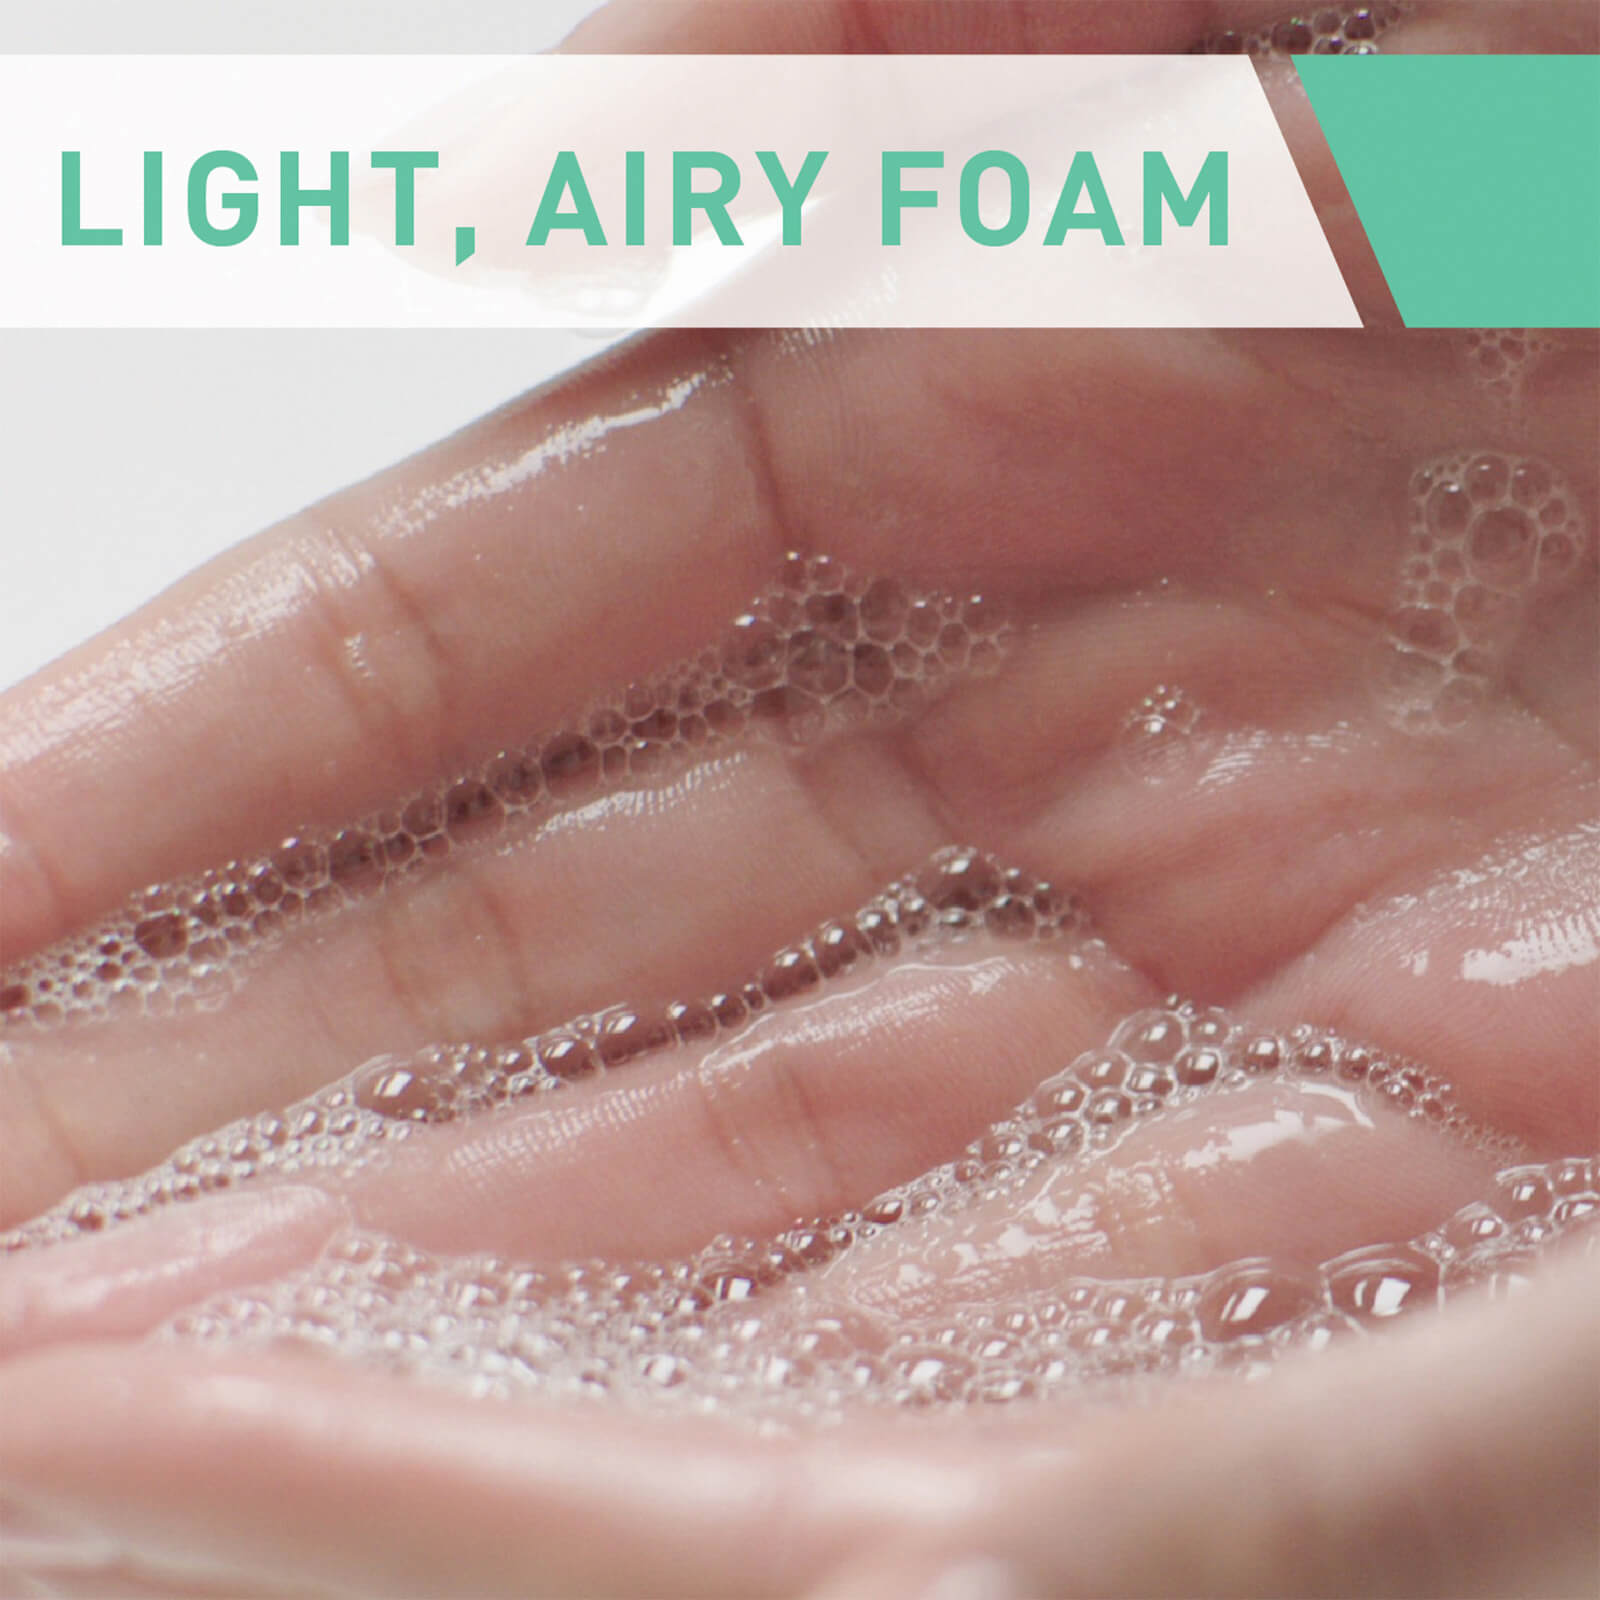 CeraVe Foaming Cleanser for Normal to Oily Skin (8 FL OZ/236 ml) CeraVe